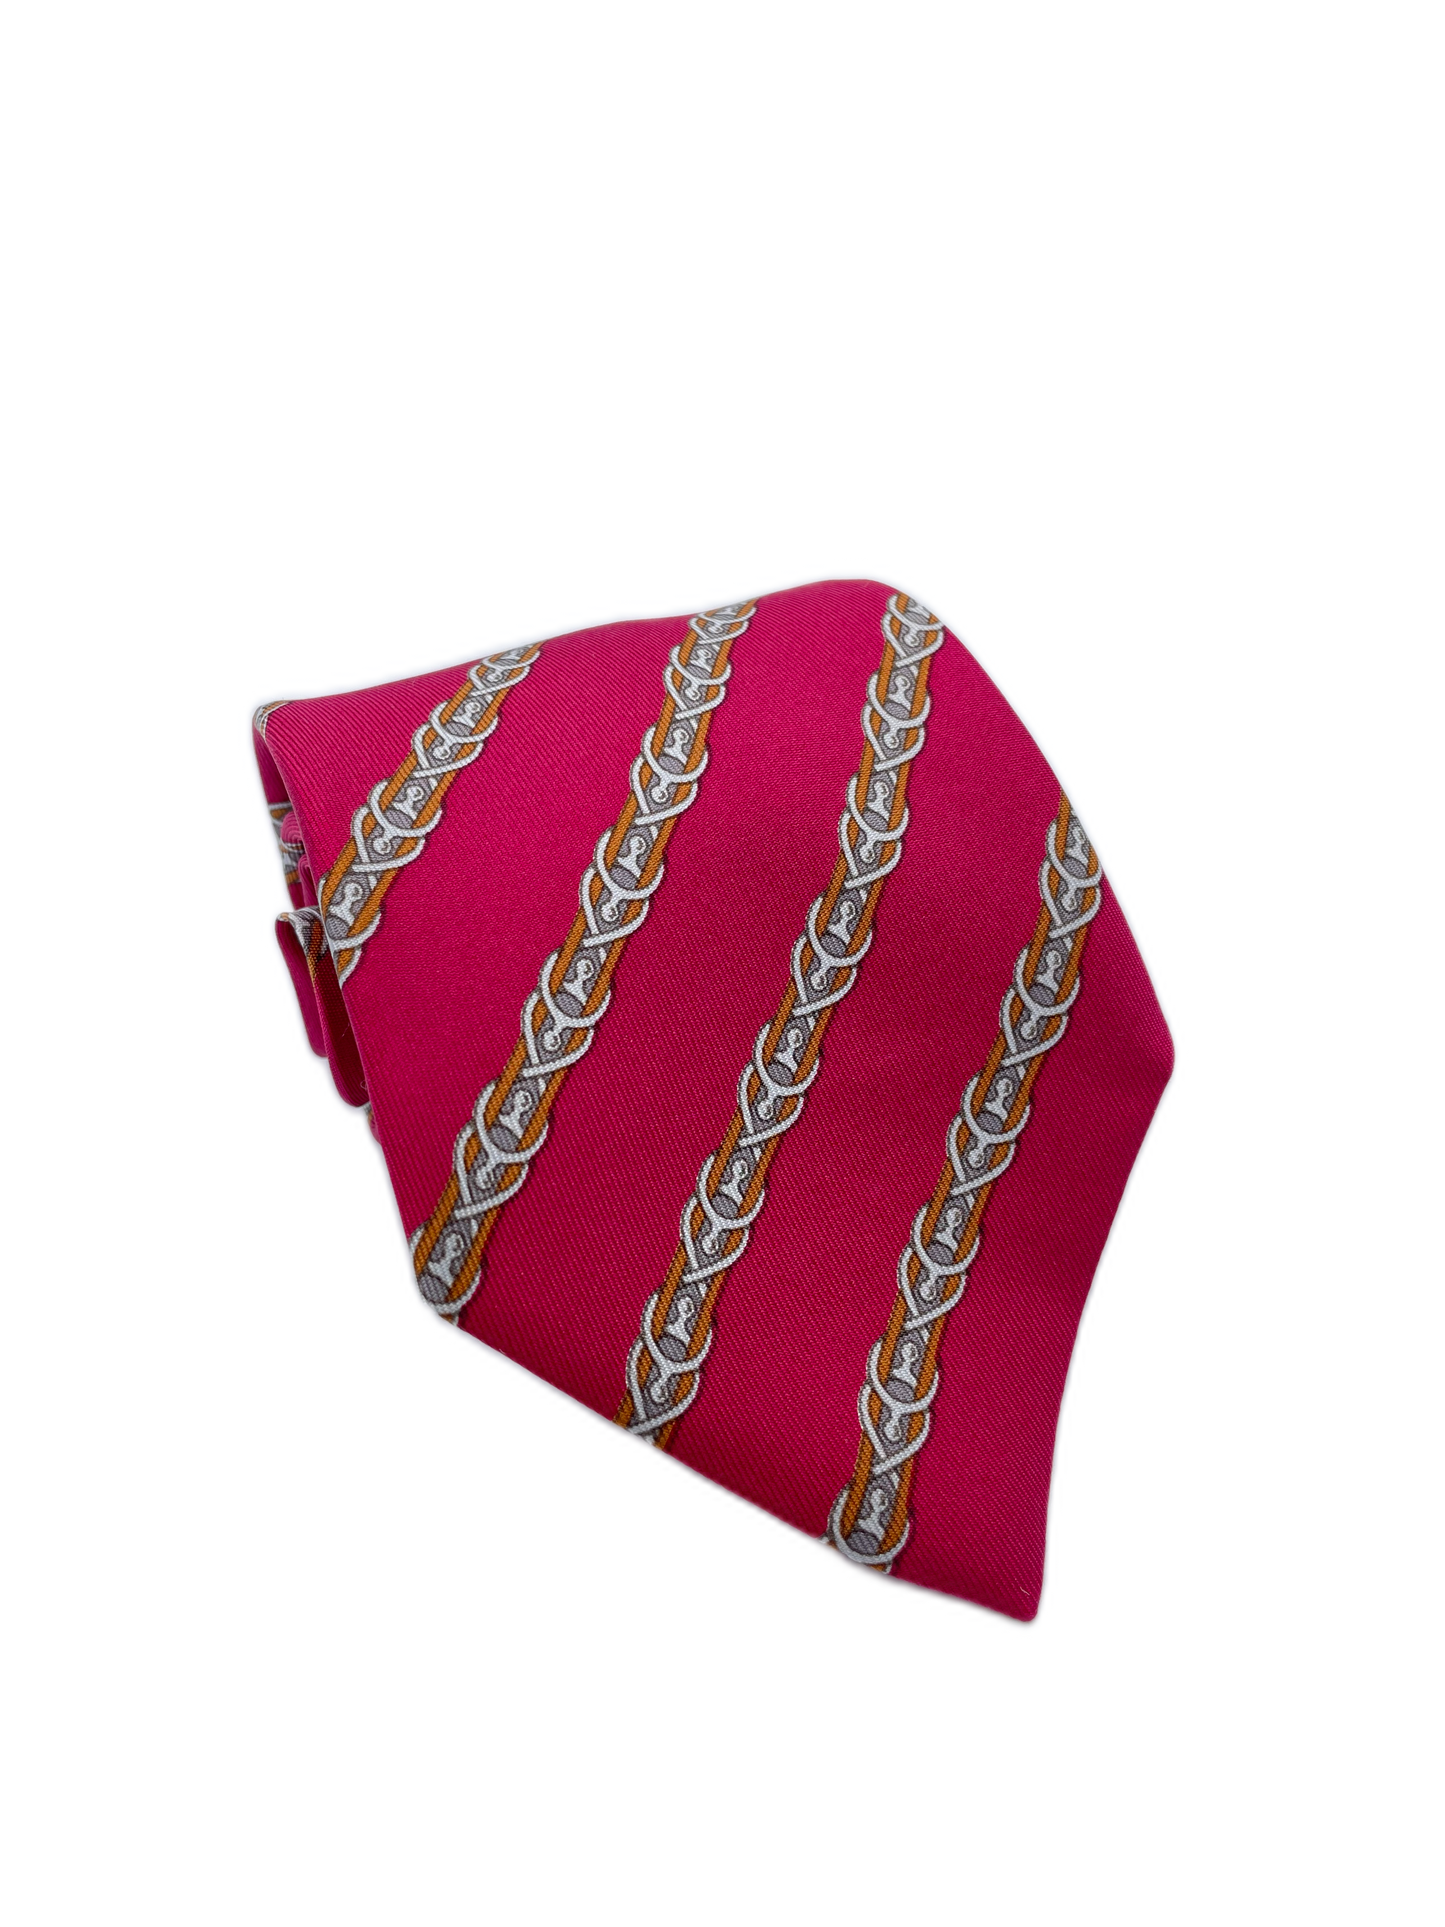 Cravatta Hermès stampa regimental sfondo rosso c.7152FA